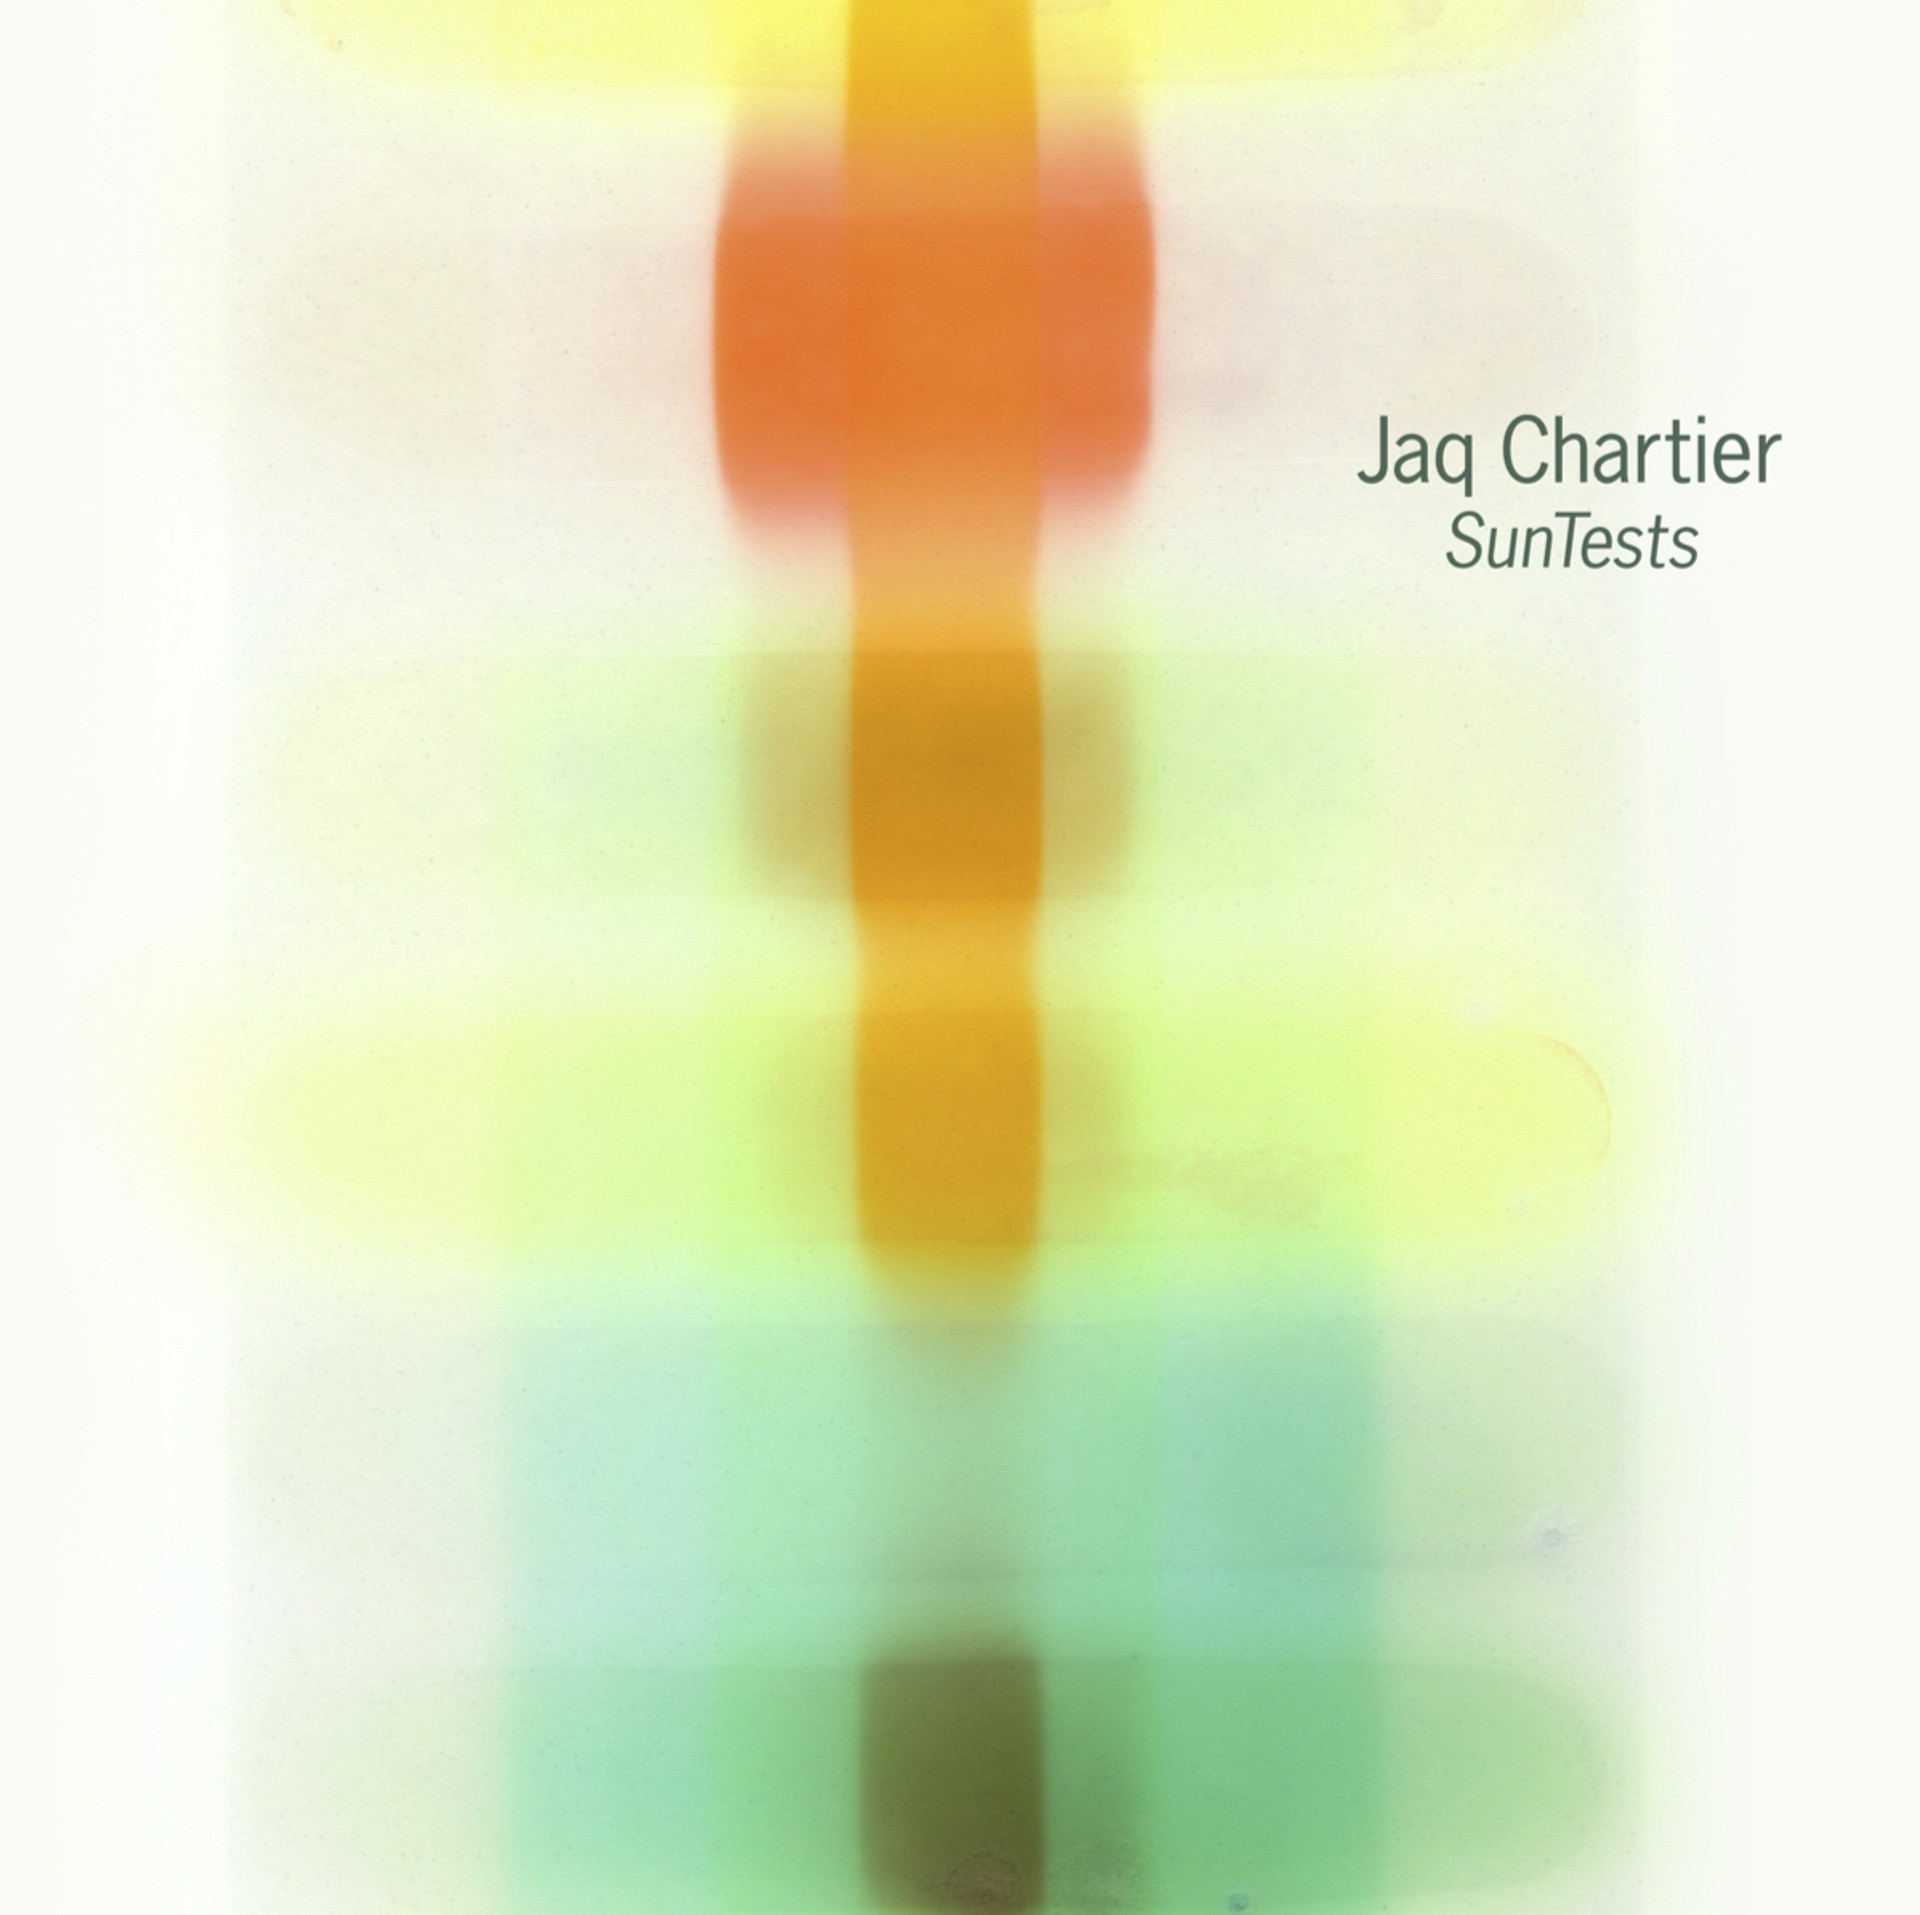 Jaq Chartier: SunTests by Jaq Chartier